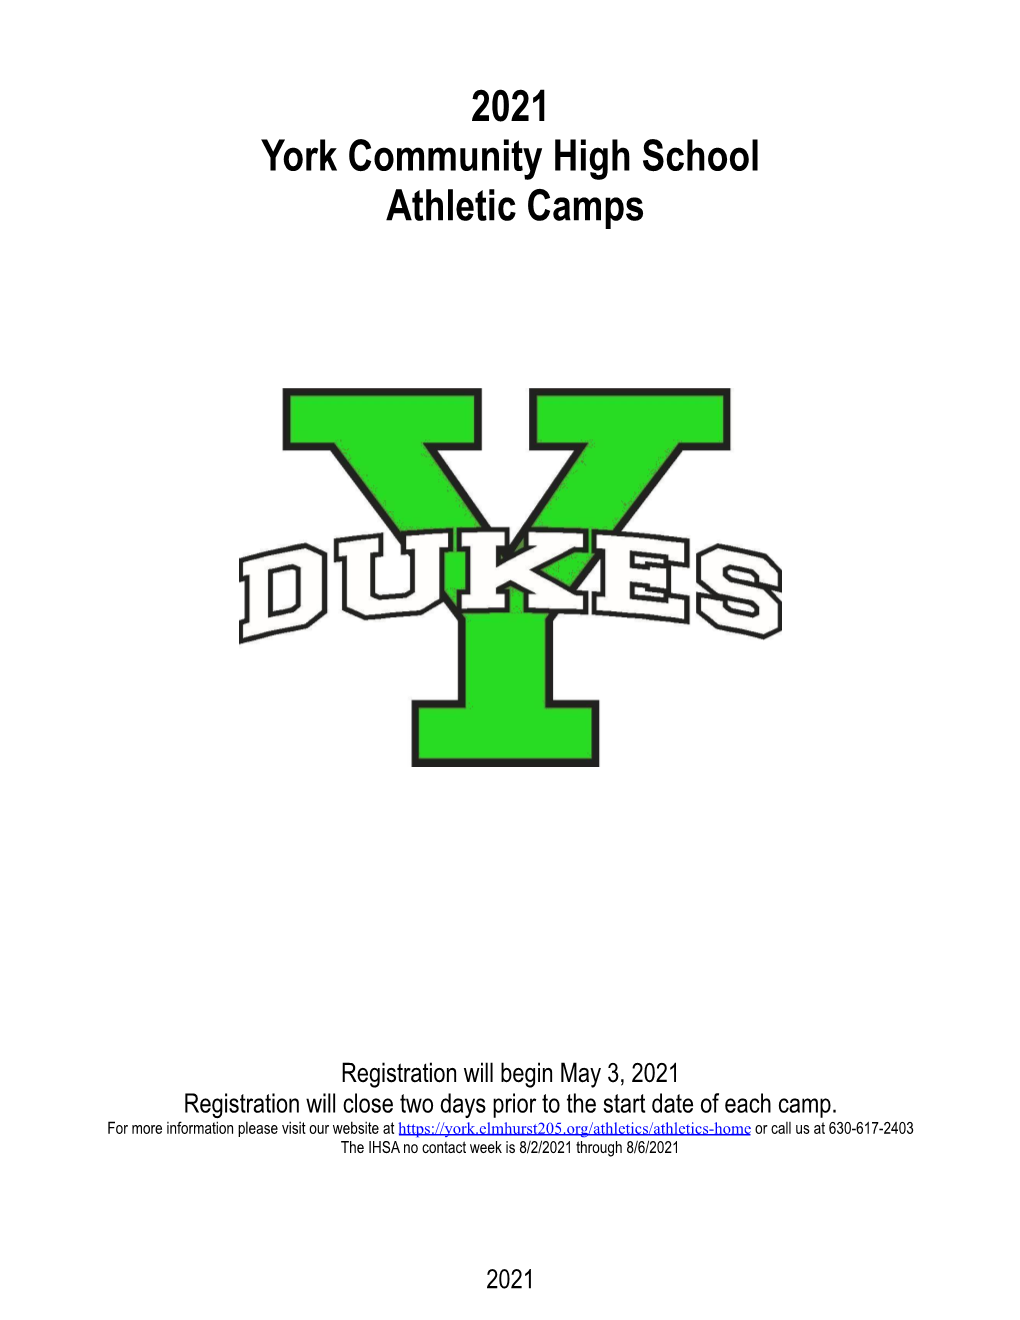 2021 York Community High School Athletic Camps